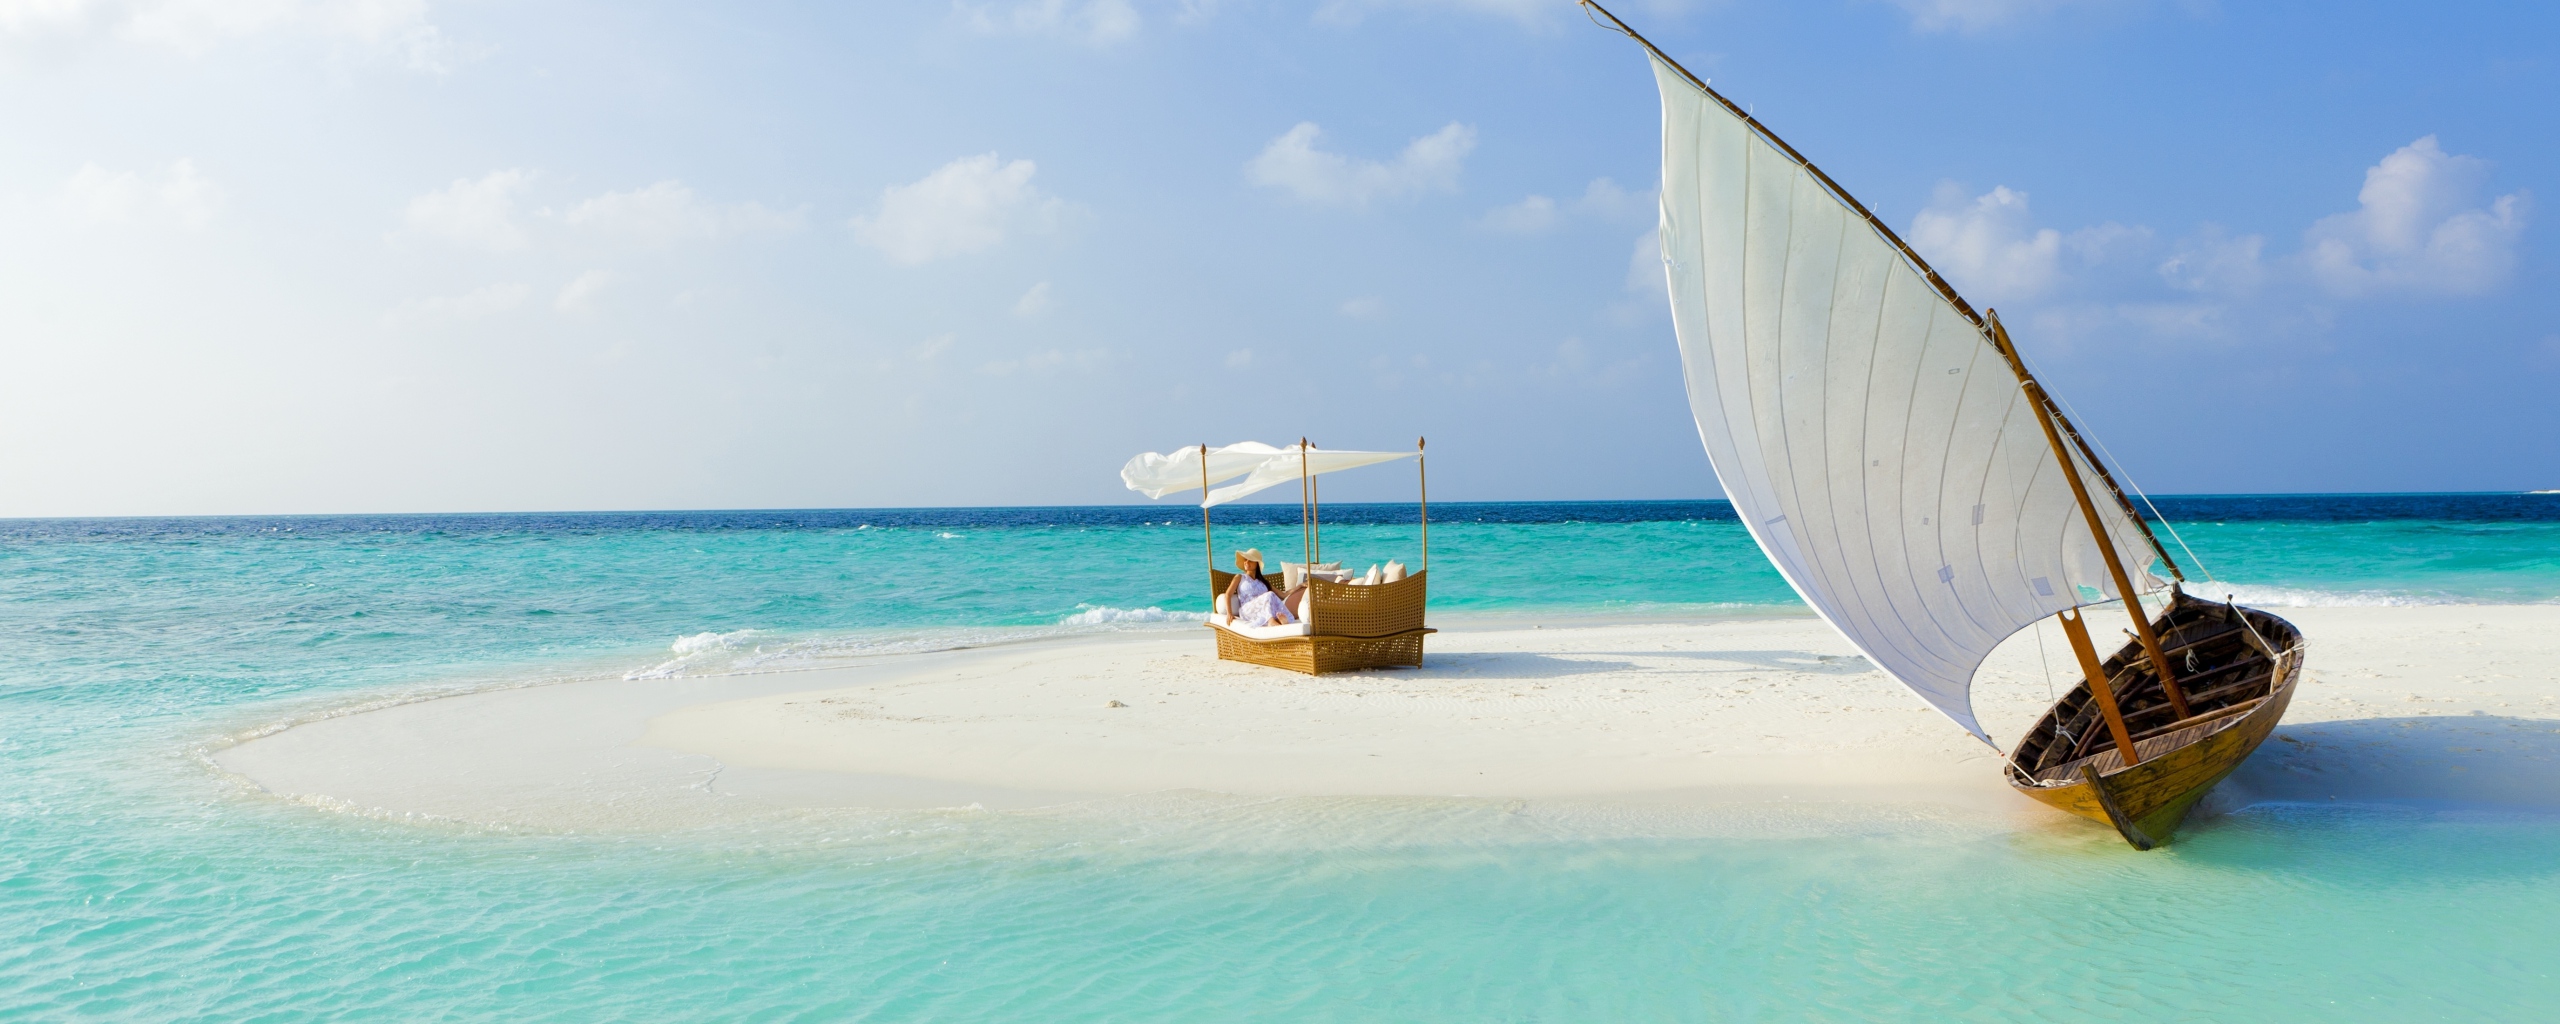 Wallpaper Maldives Beach Tropical Sea Sand Island Boat